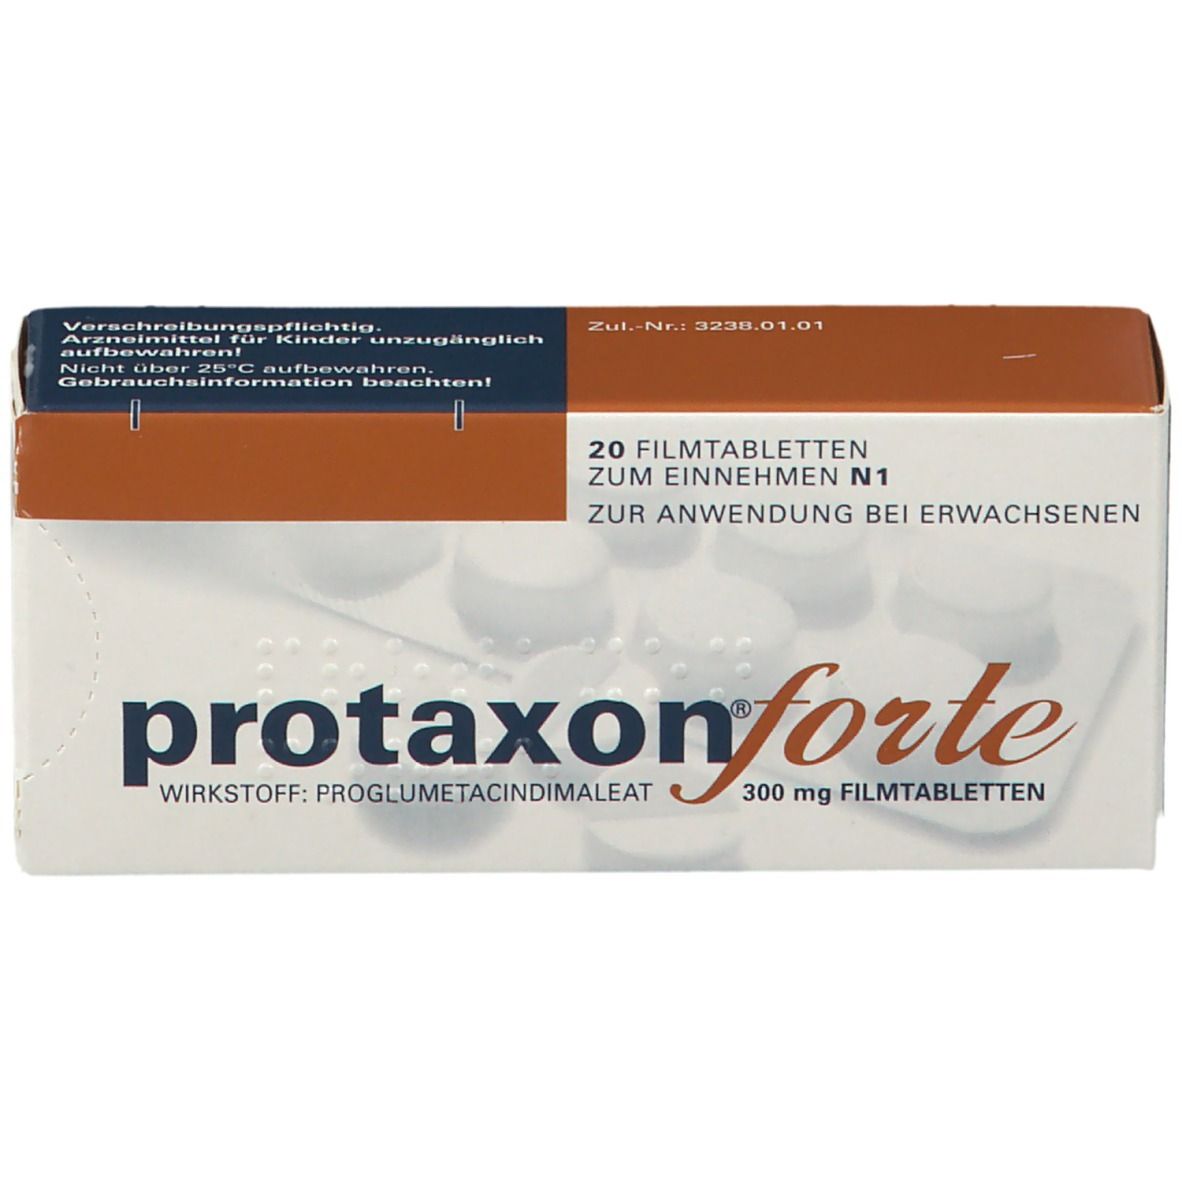 protaxon® forte 300 mg